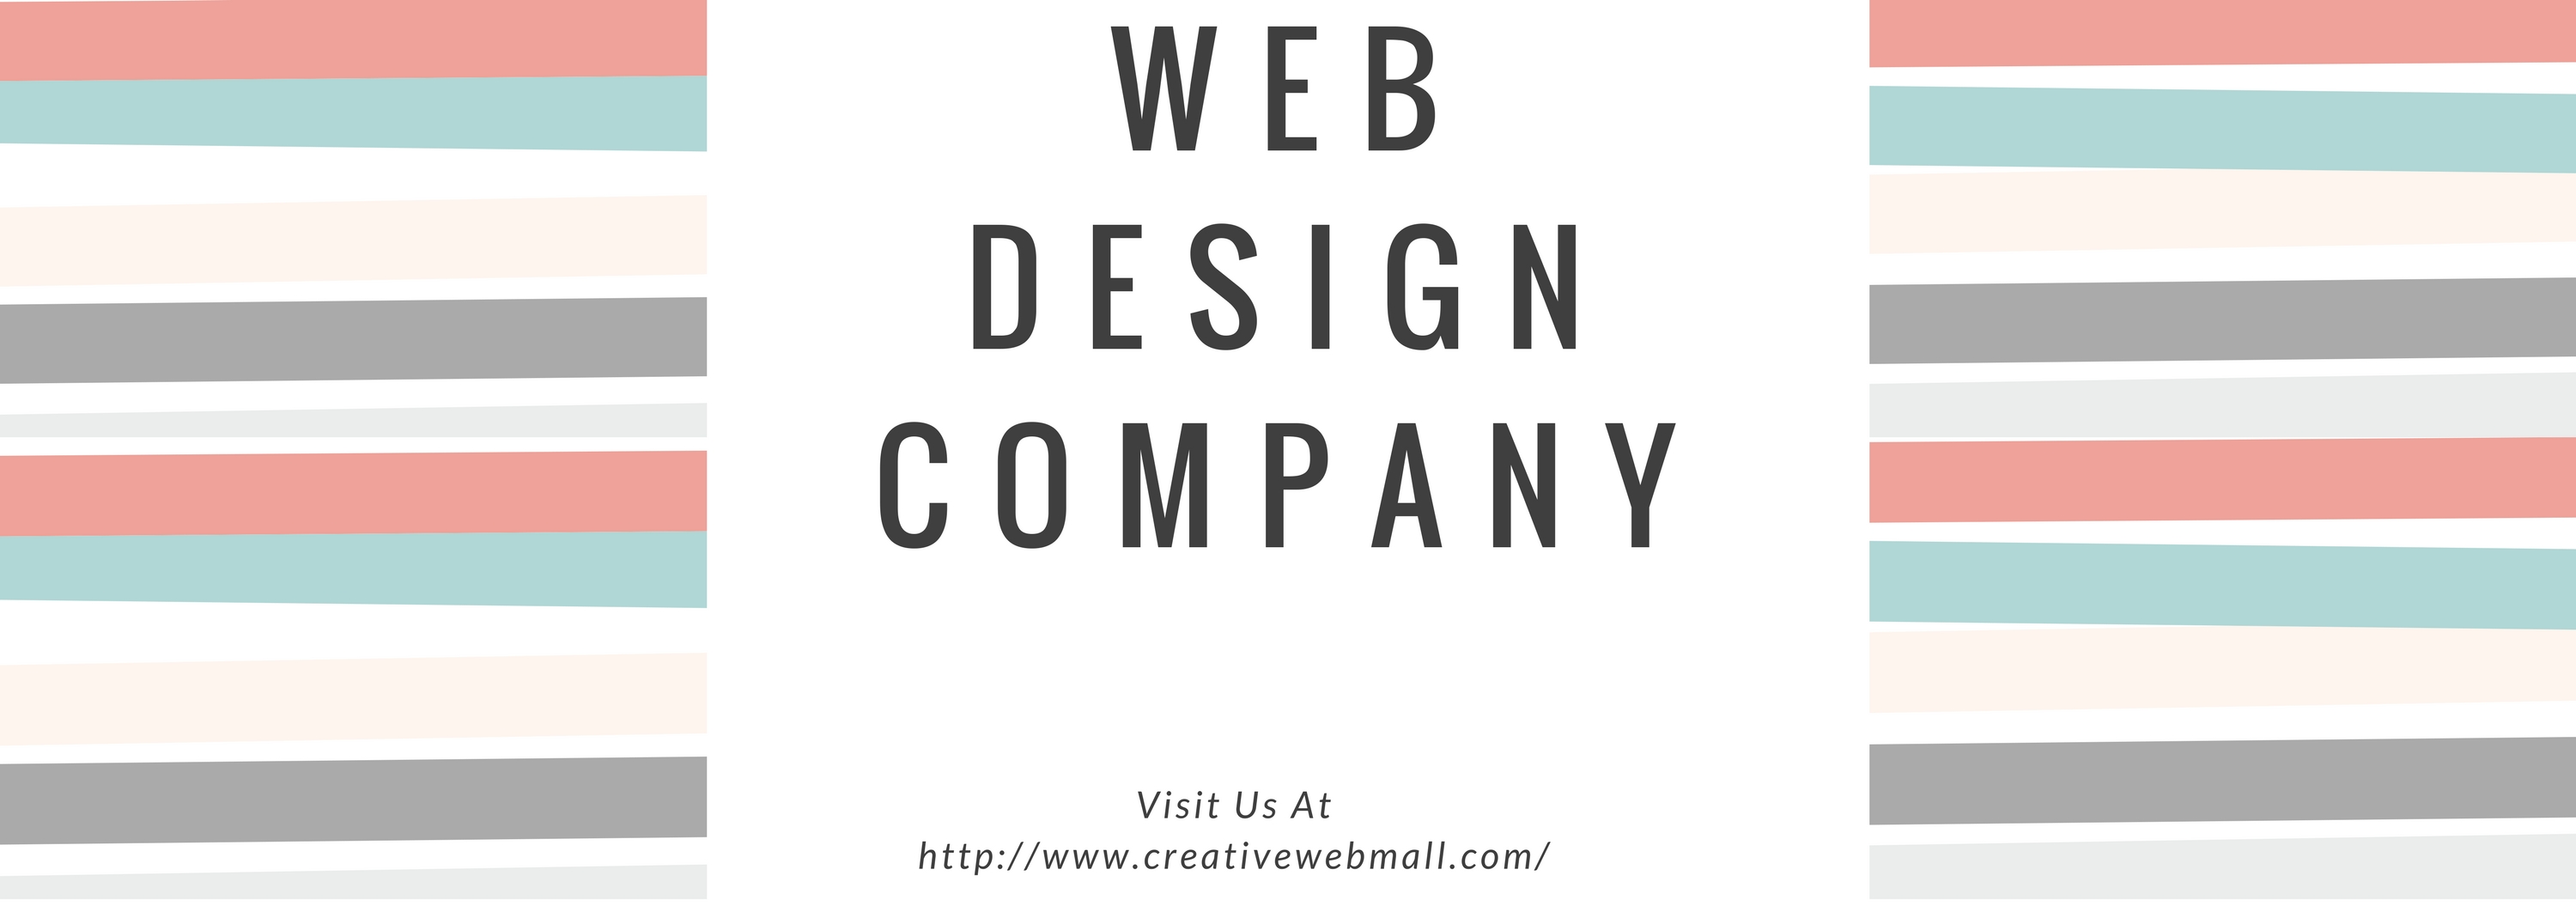 Web Design Enterprise